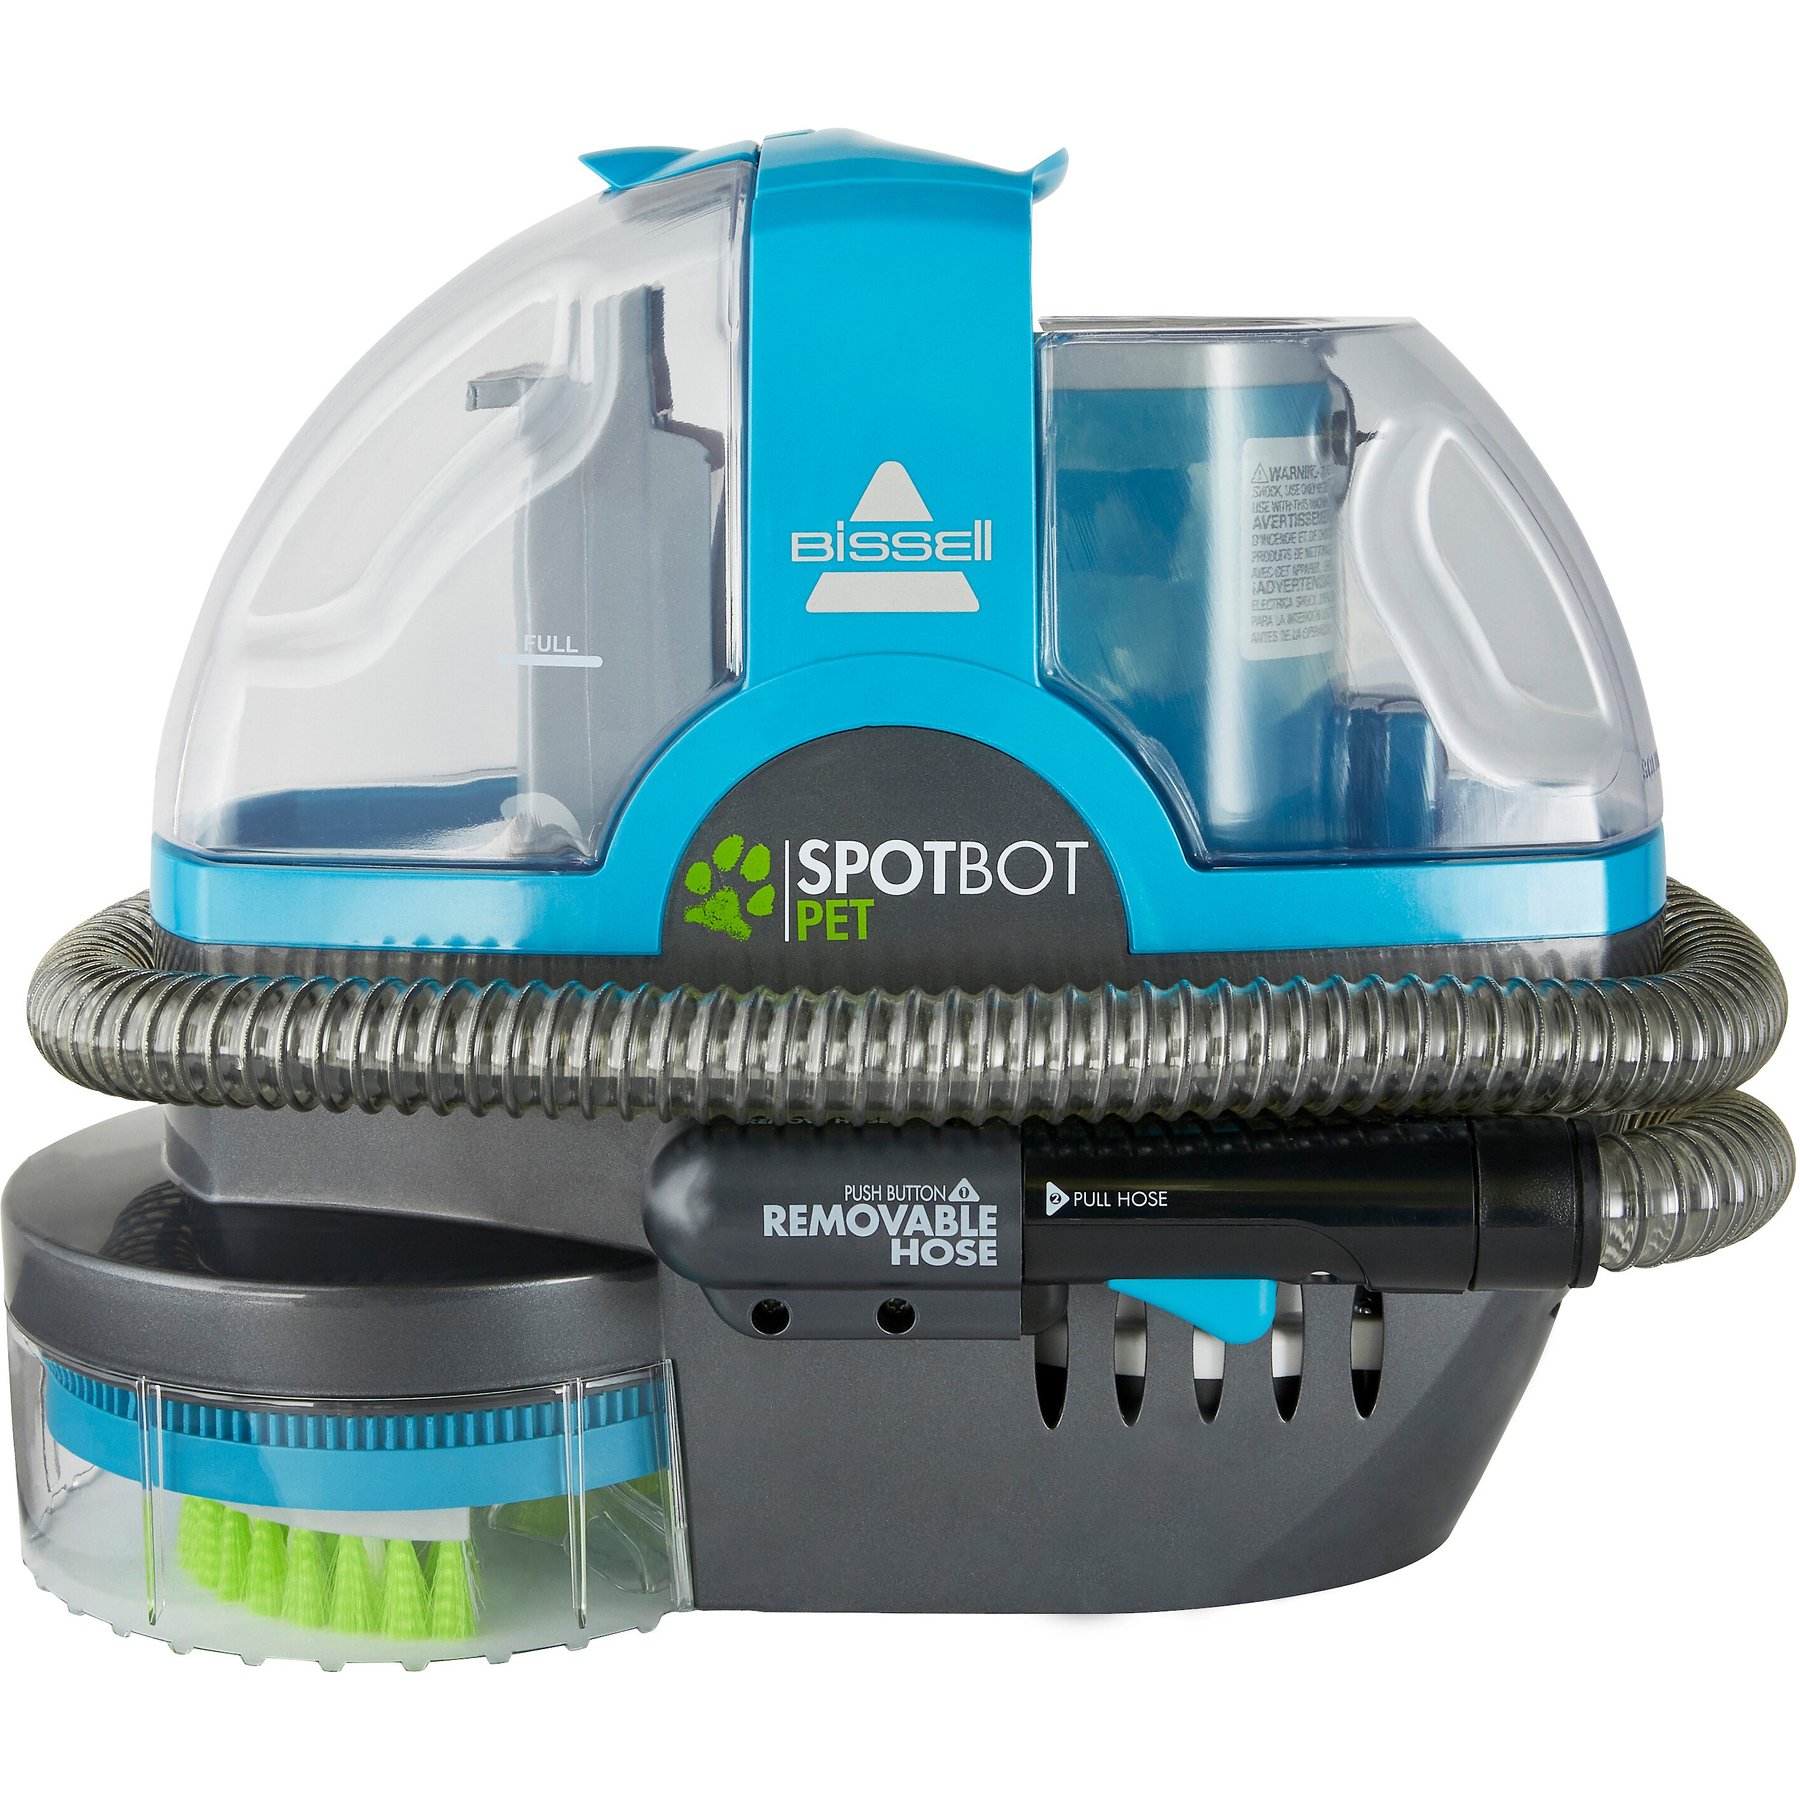 SpotBot® Portable Carpet Cleaner 2117